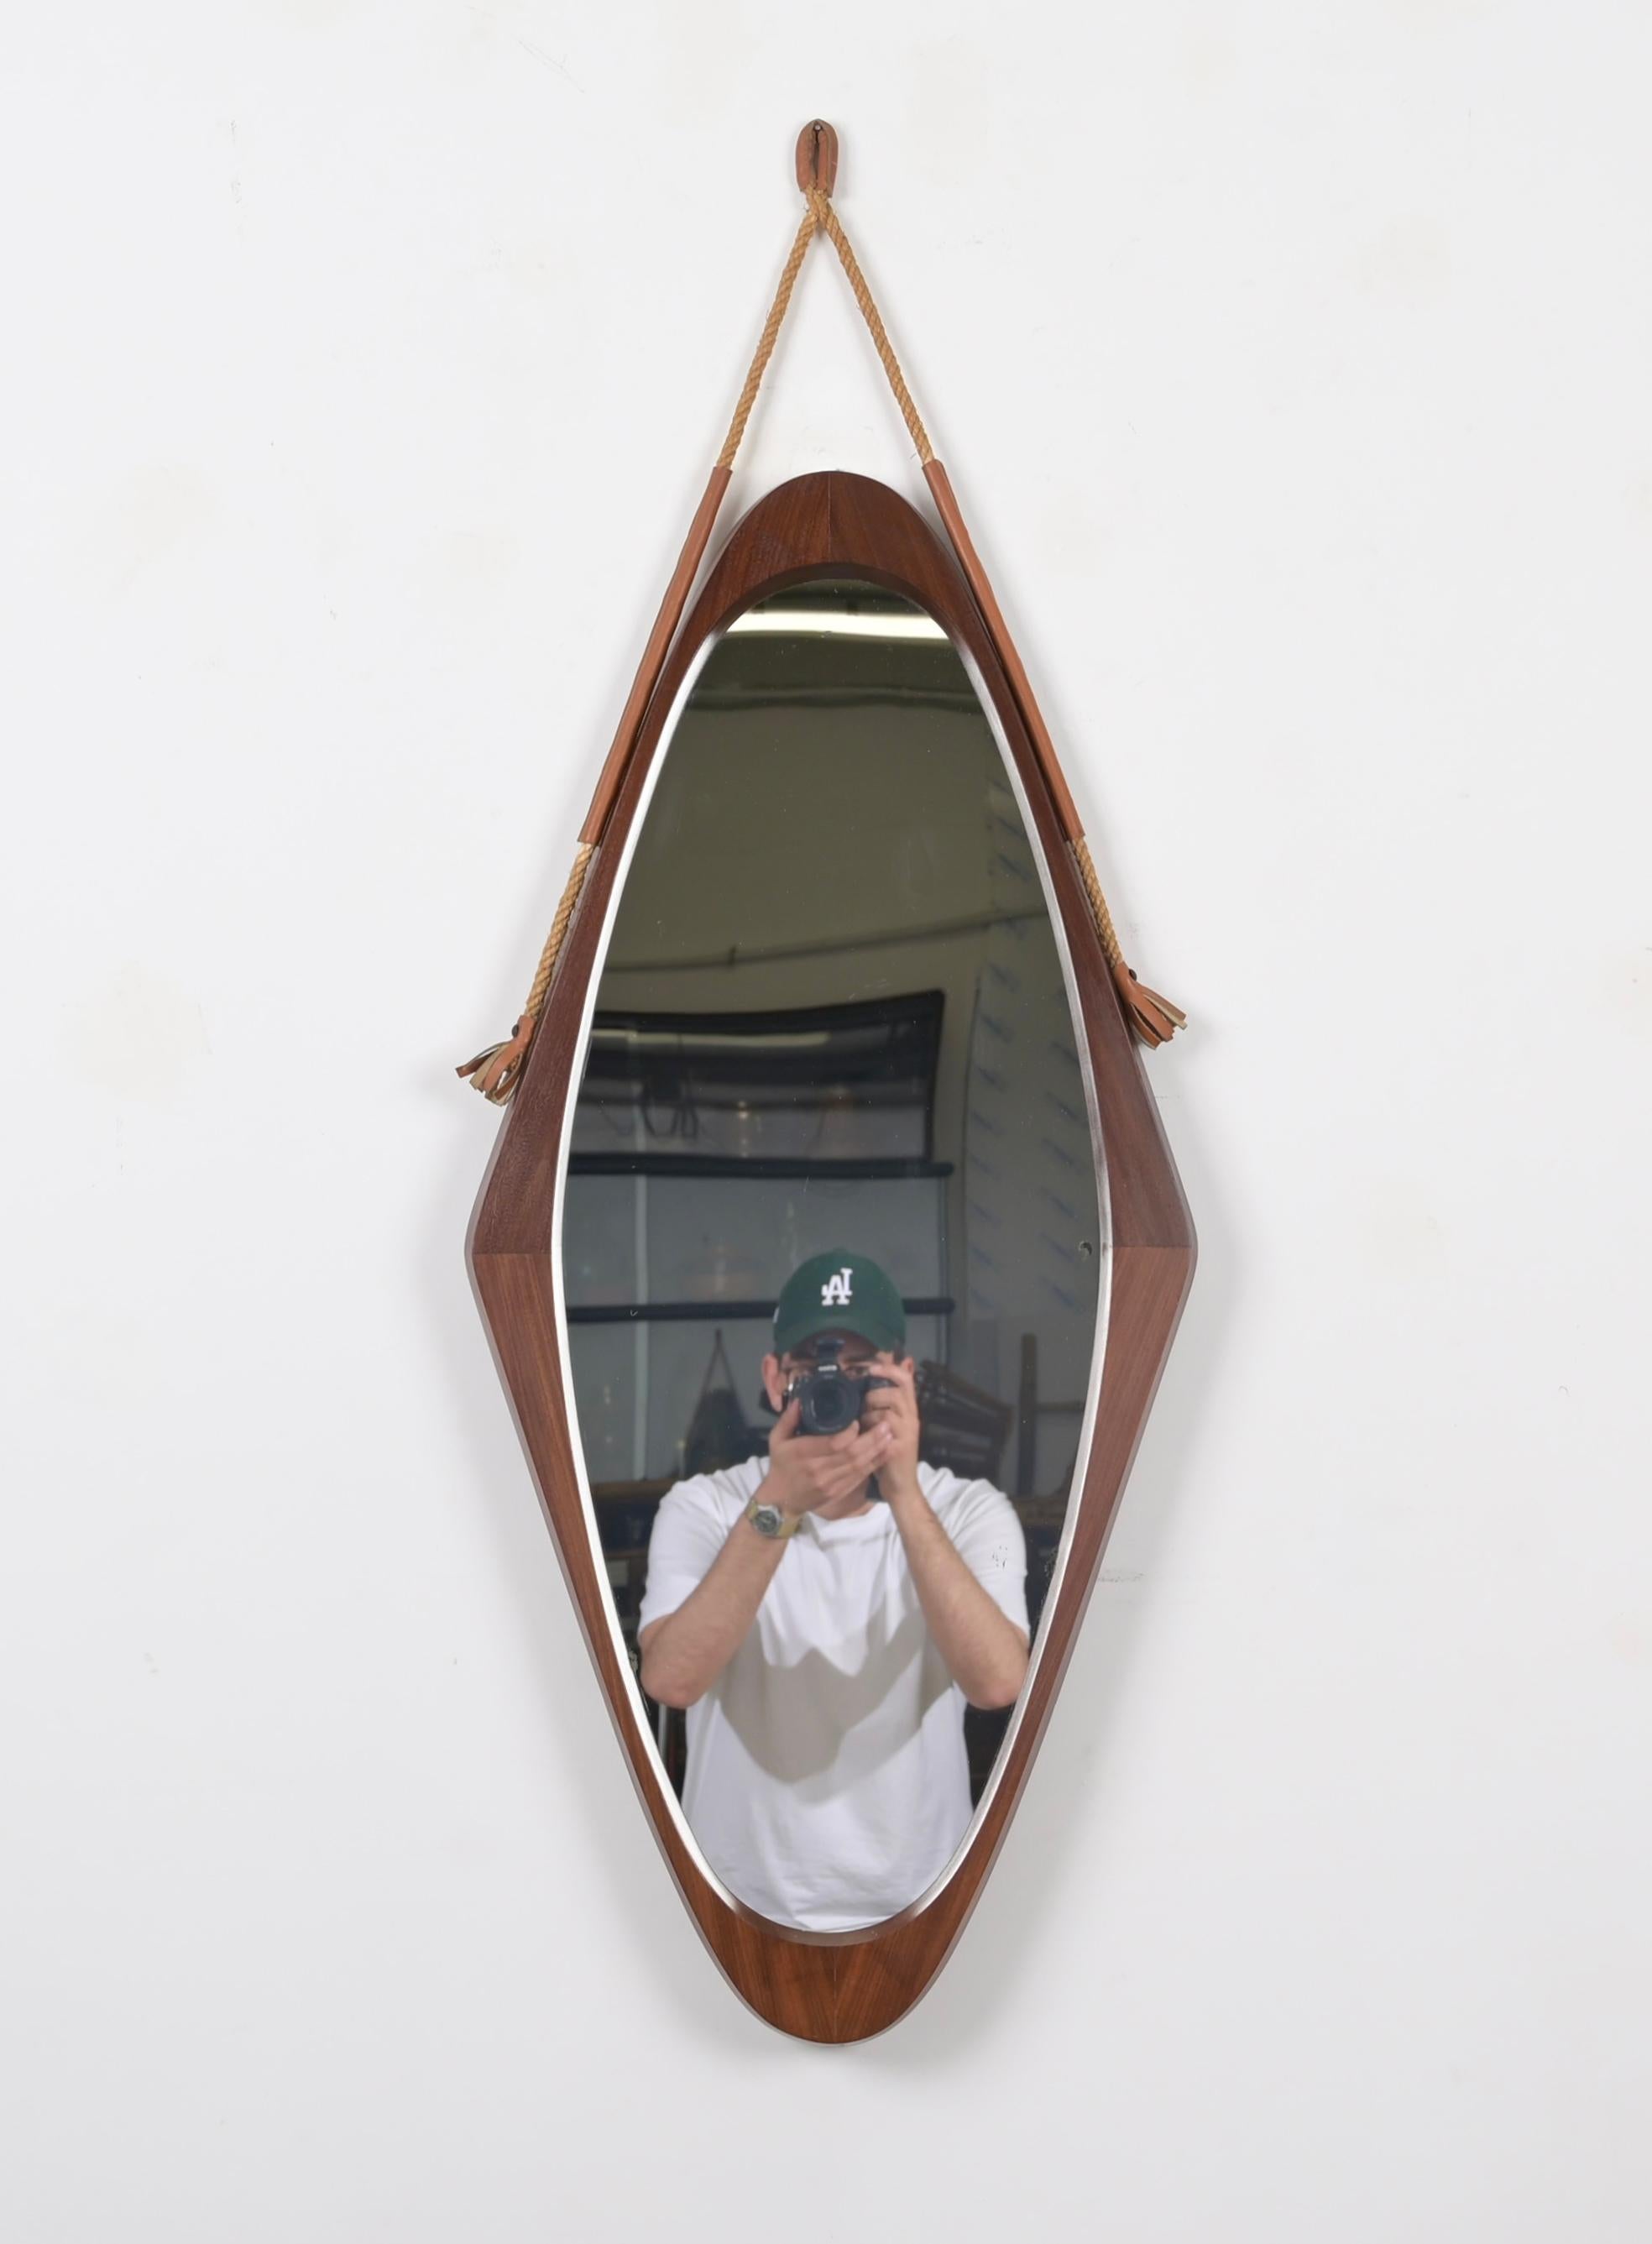 Miroir ovale 